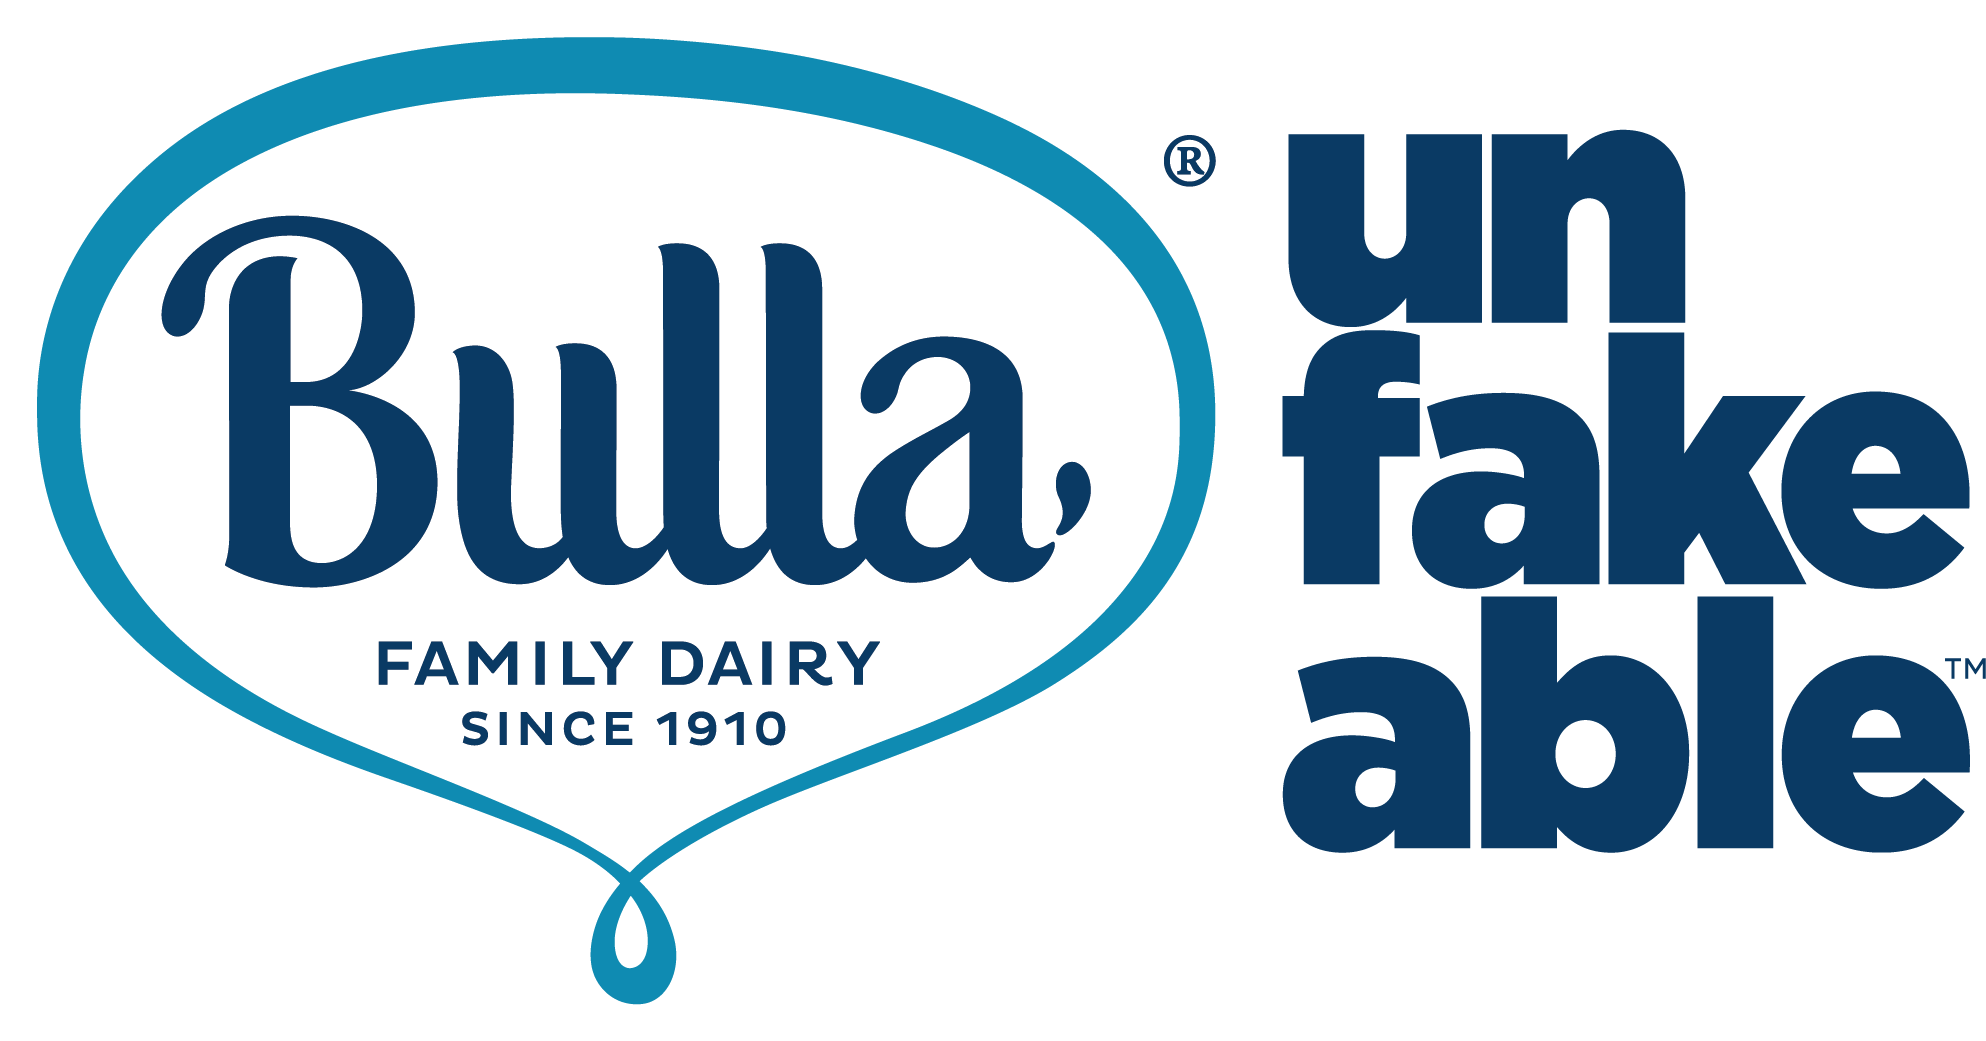 Since 1998. Dairy Classic логотип. Дейри. Dairy Spring лого. Bulla надпись.